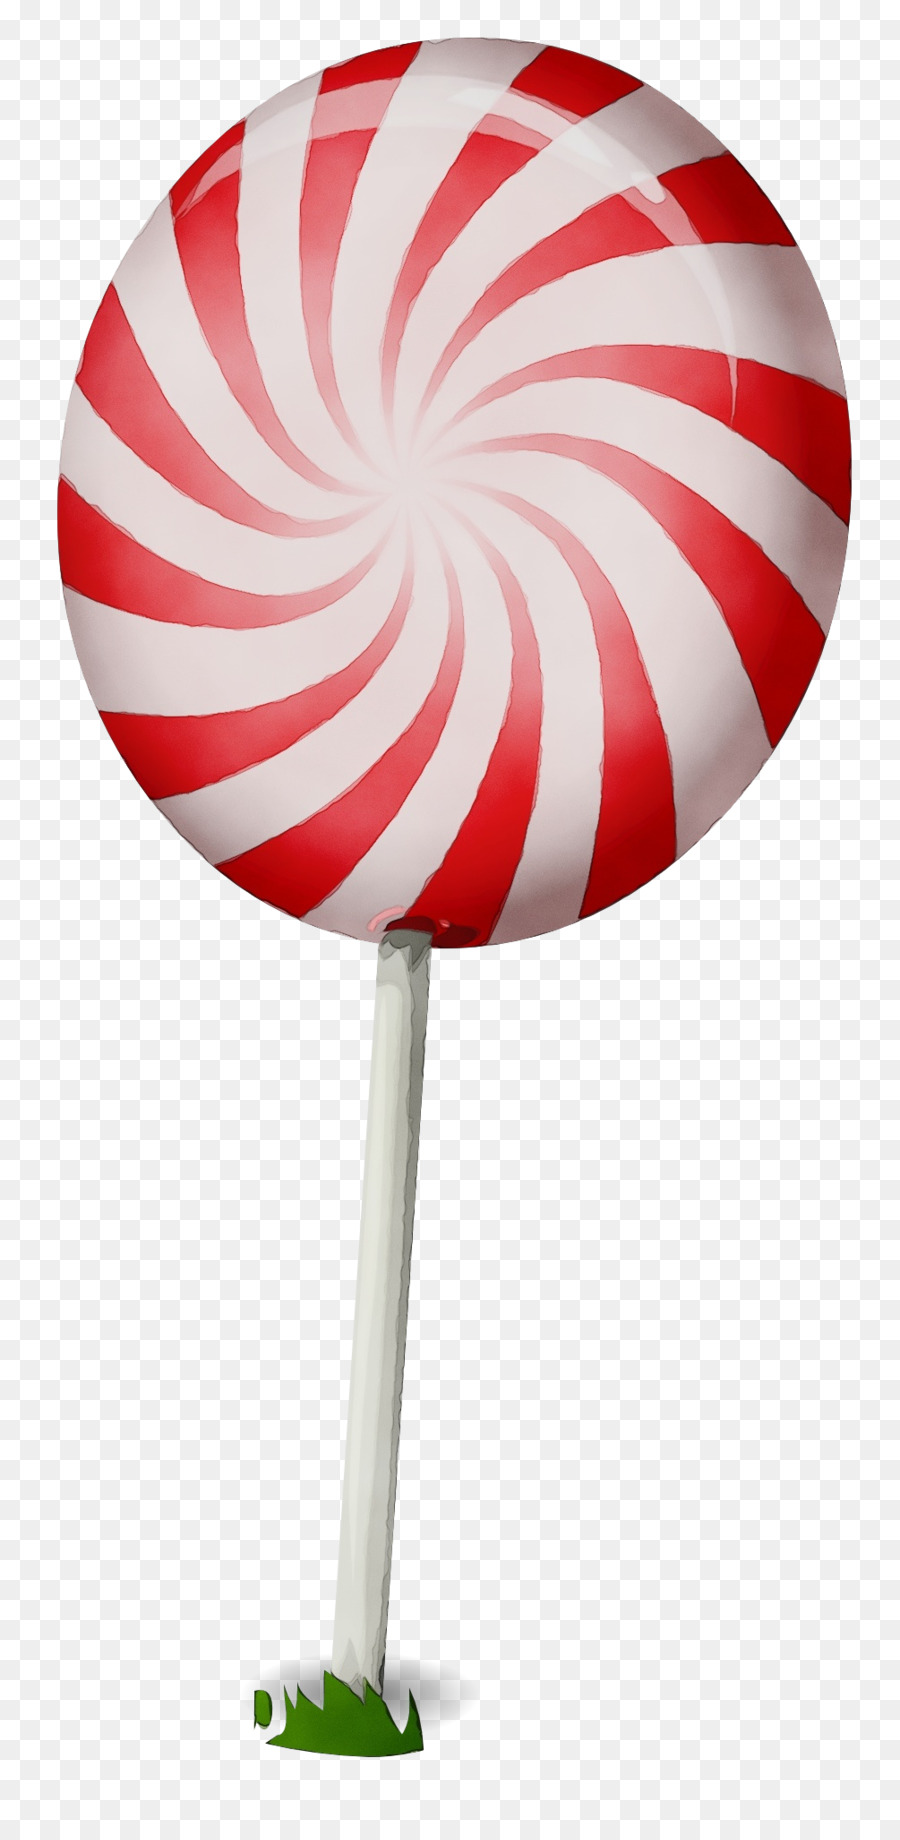 Lollipop Portable Network Graphics Vector đồ họa Candy Clip nghệ thuật - 